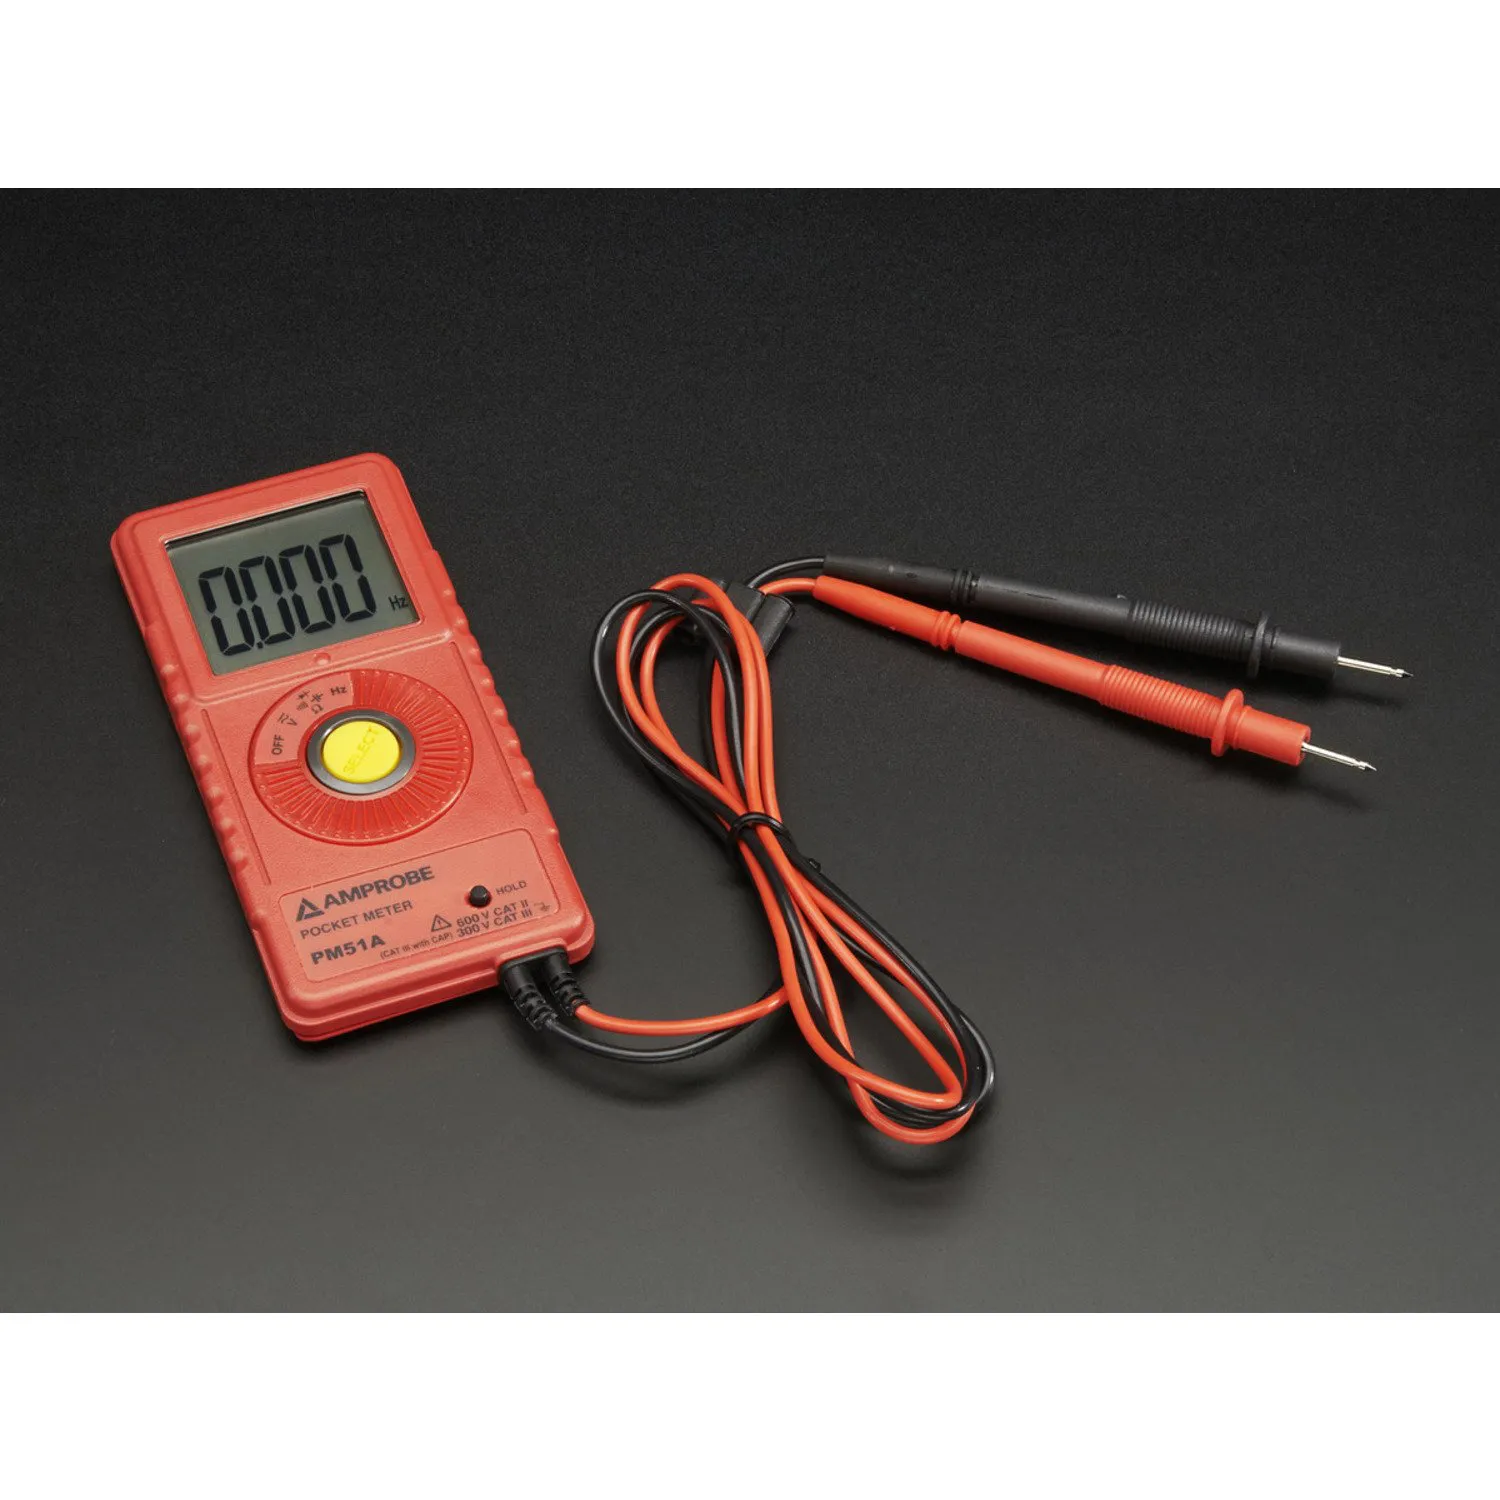 Photo of PM51A - Amprobe Pocket Autoranging Digital Multimeter